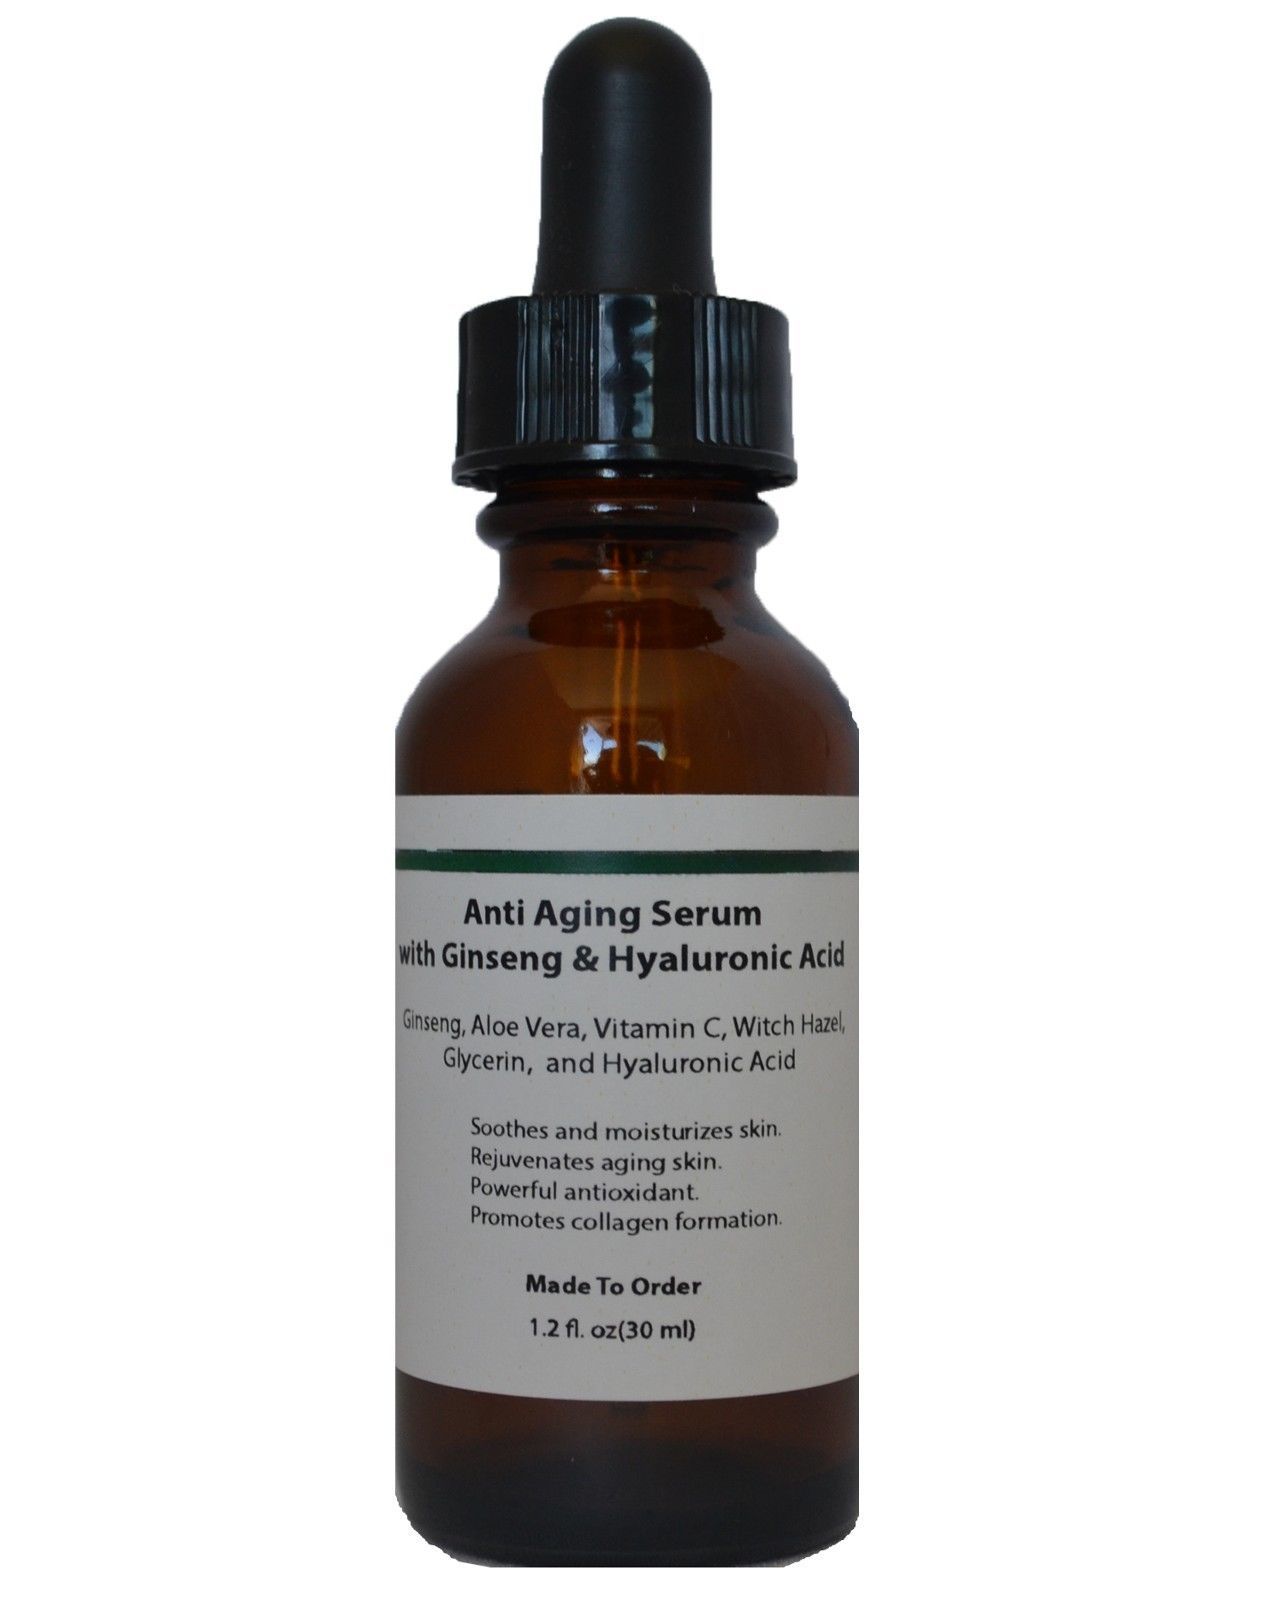 Anti Aging Serum with Ginseng,Aloe Vera, and Hyaluronic Acid Serum - $17.77 - $27.67